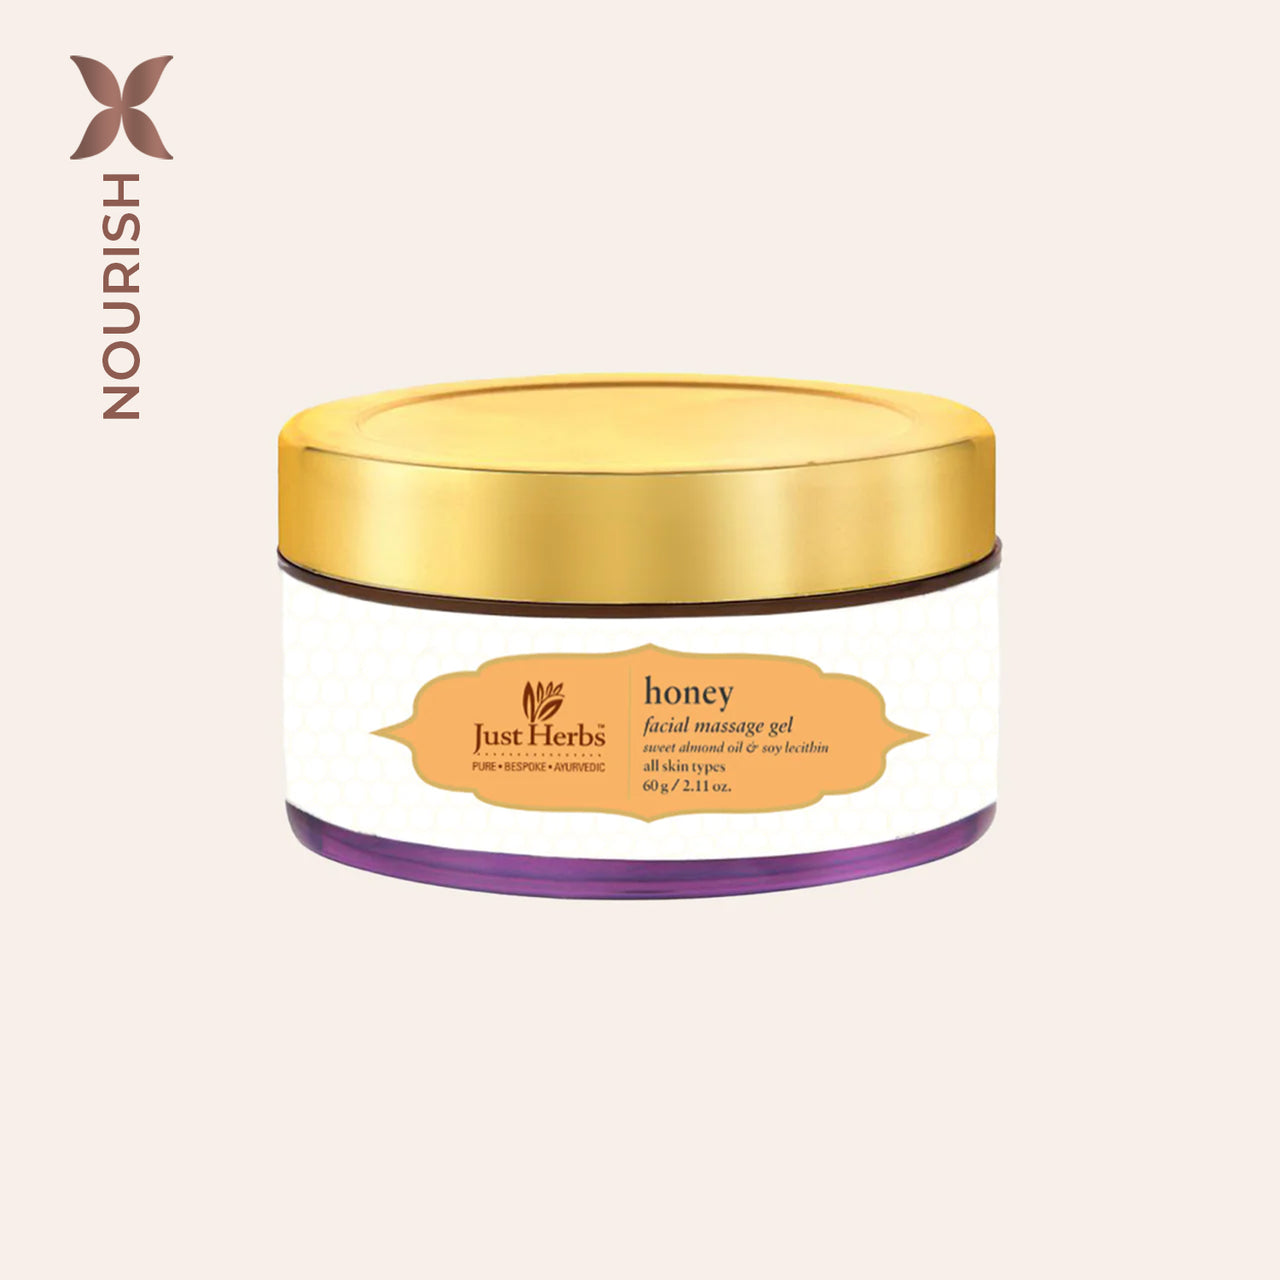 Honey Facial Massage Gel - 60g